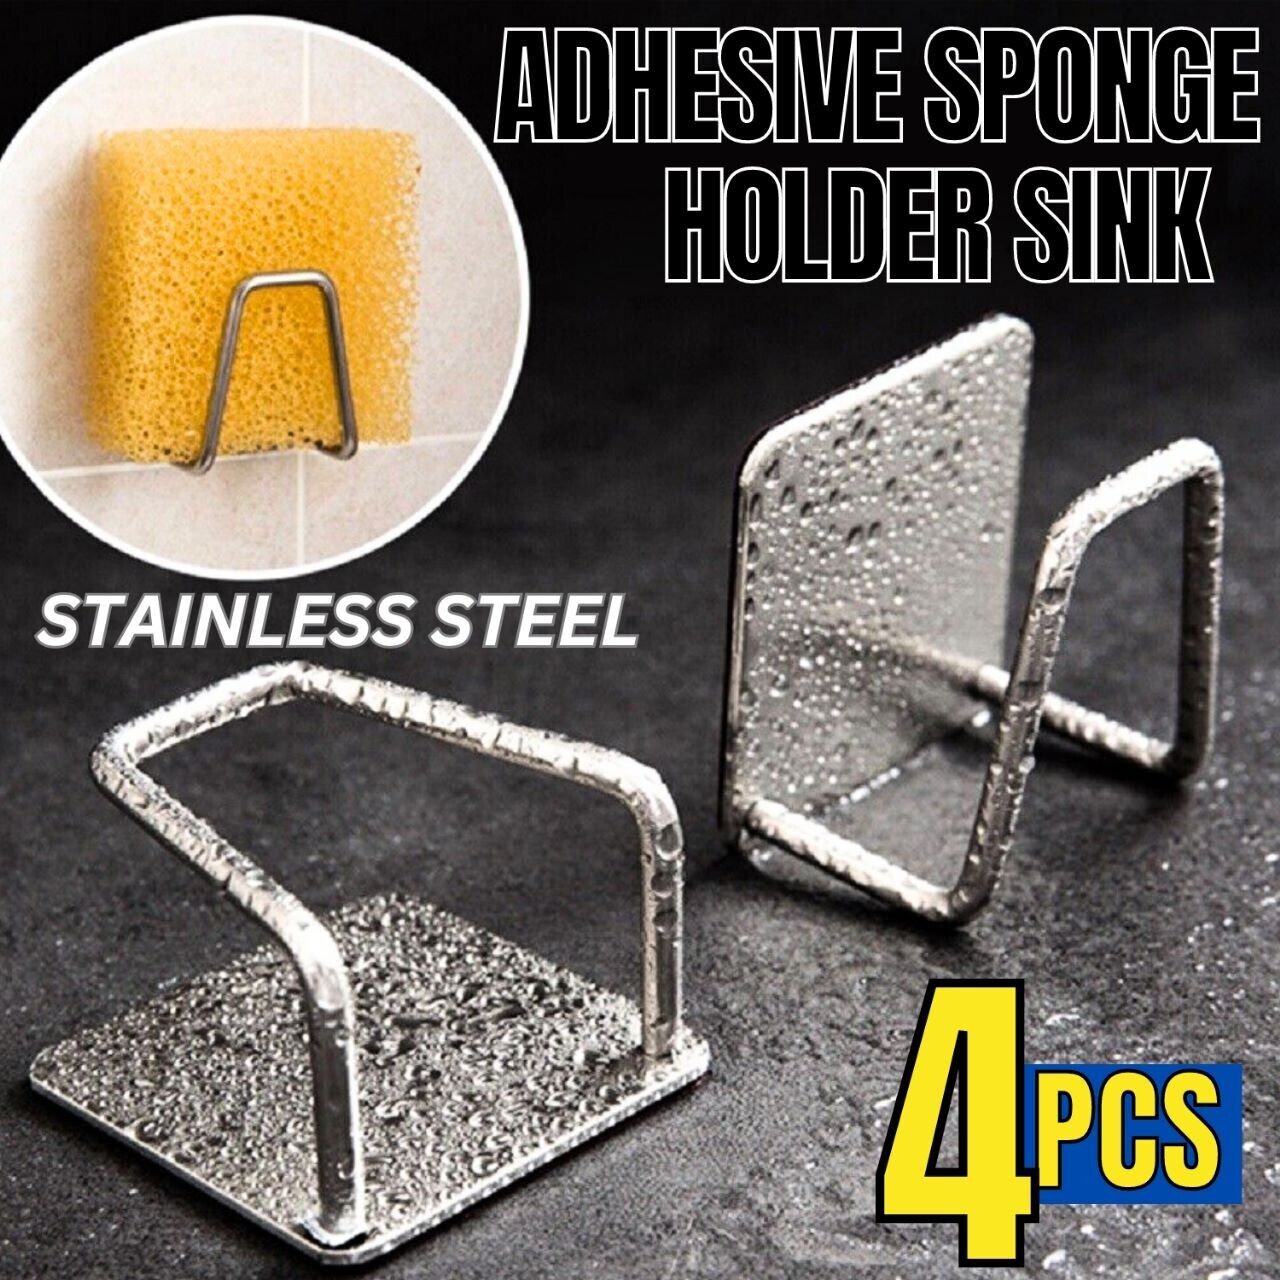 4 Pcs Stainless Steel  Adhesive Sponge Holder Sink